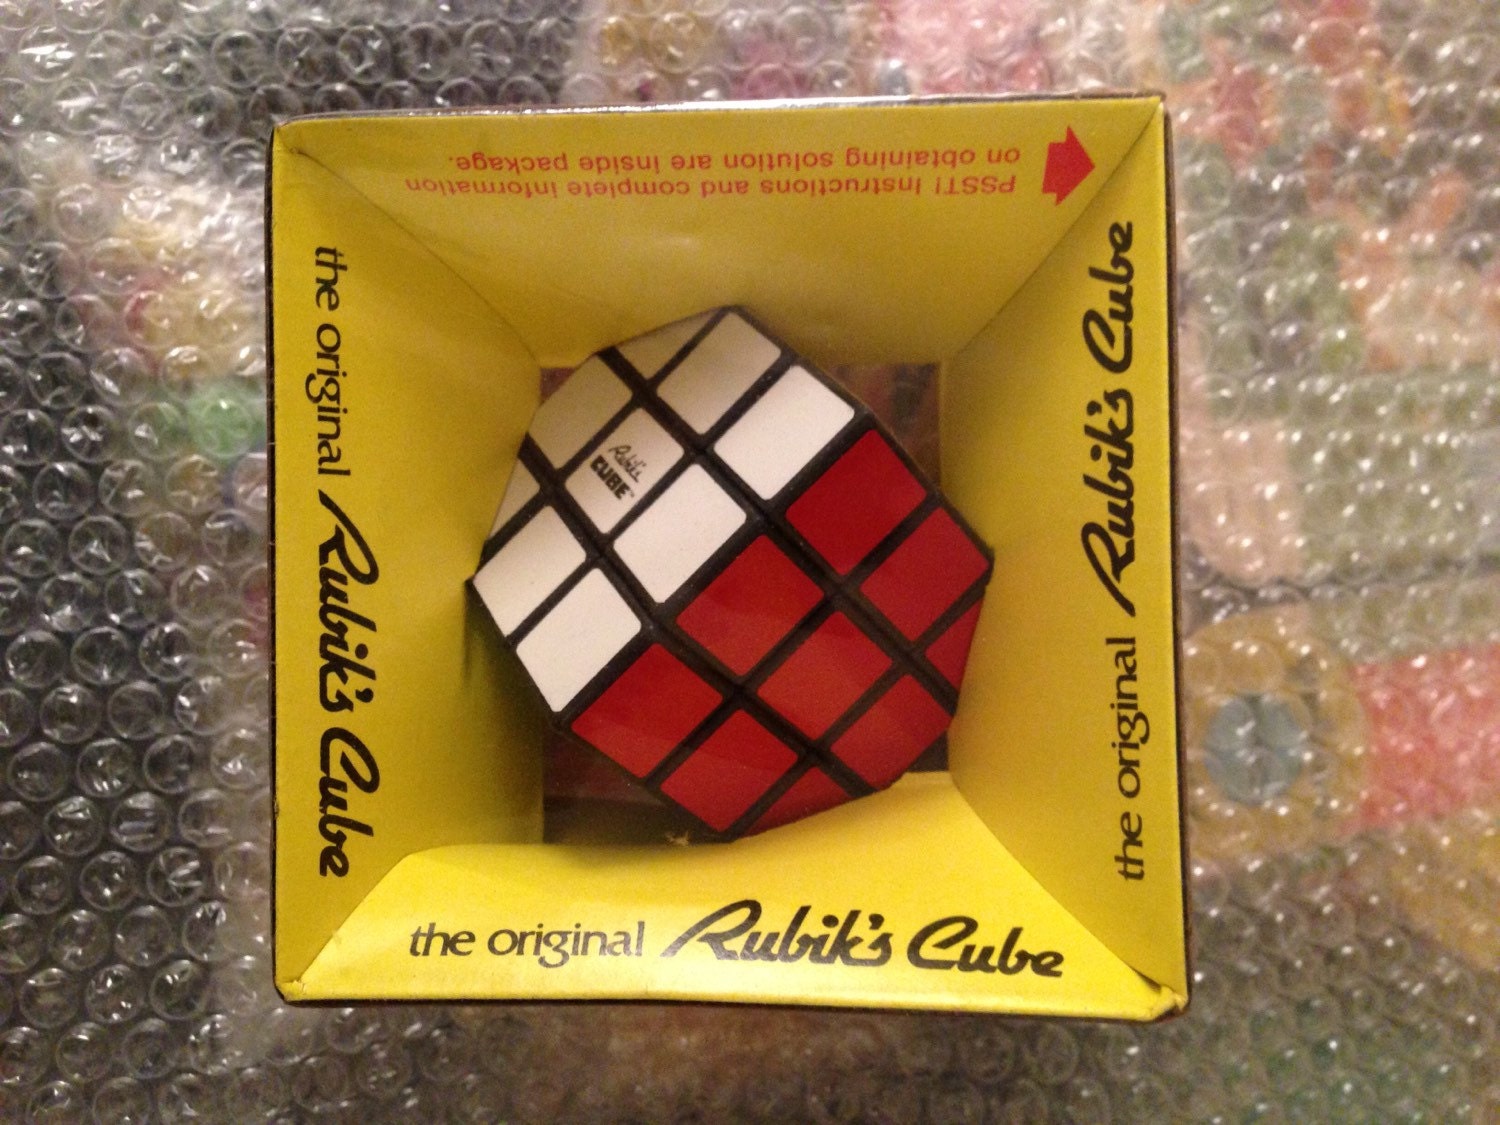 1981 Ideal original Rubik's Cube factory sealed new old stock gem mint